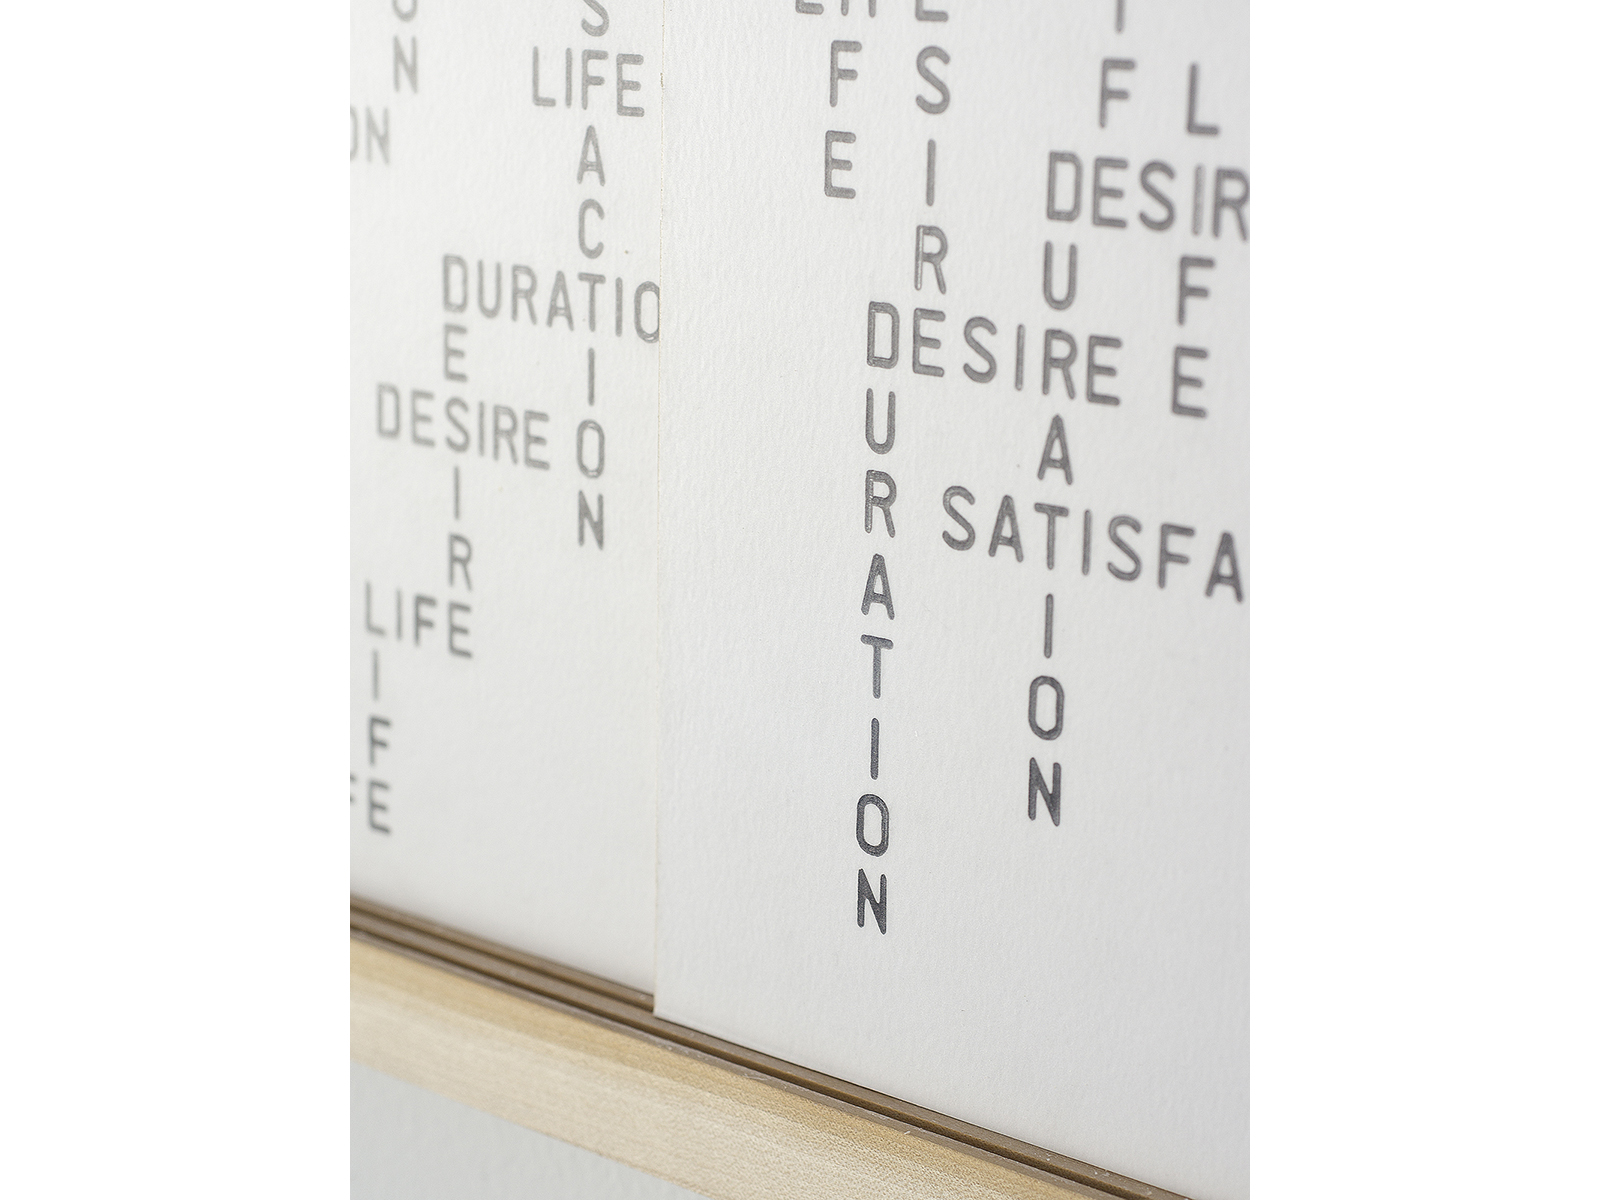 Benoit-Delaunay-artiste-installations-2013-A Set of Valuable Skills-Life-Desire-Satisfaction-Duration-07